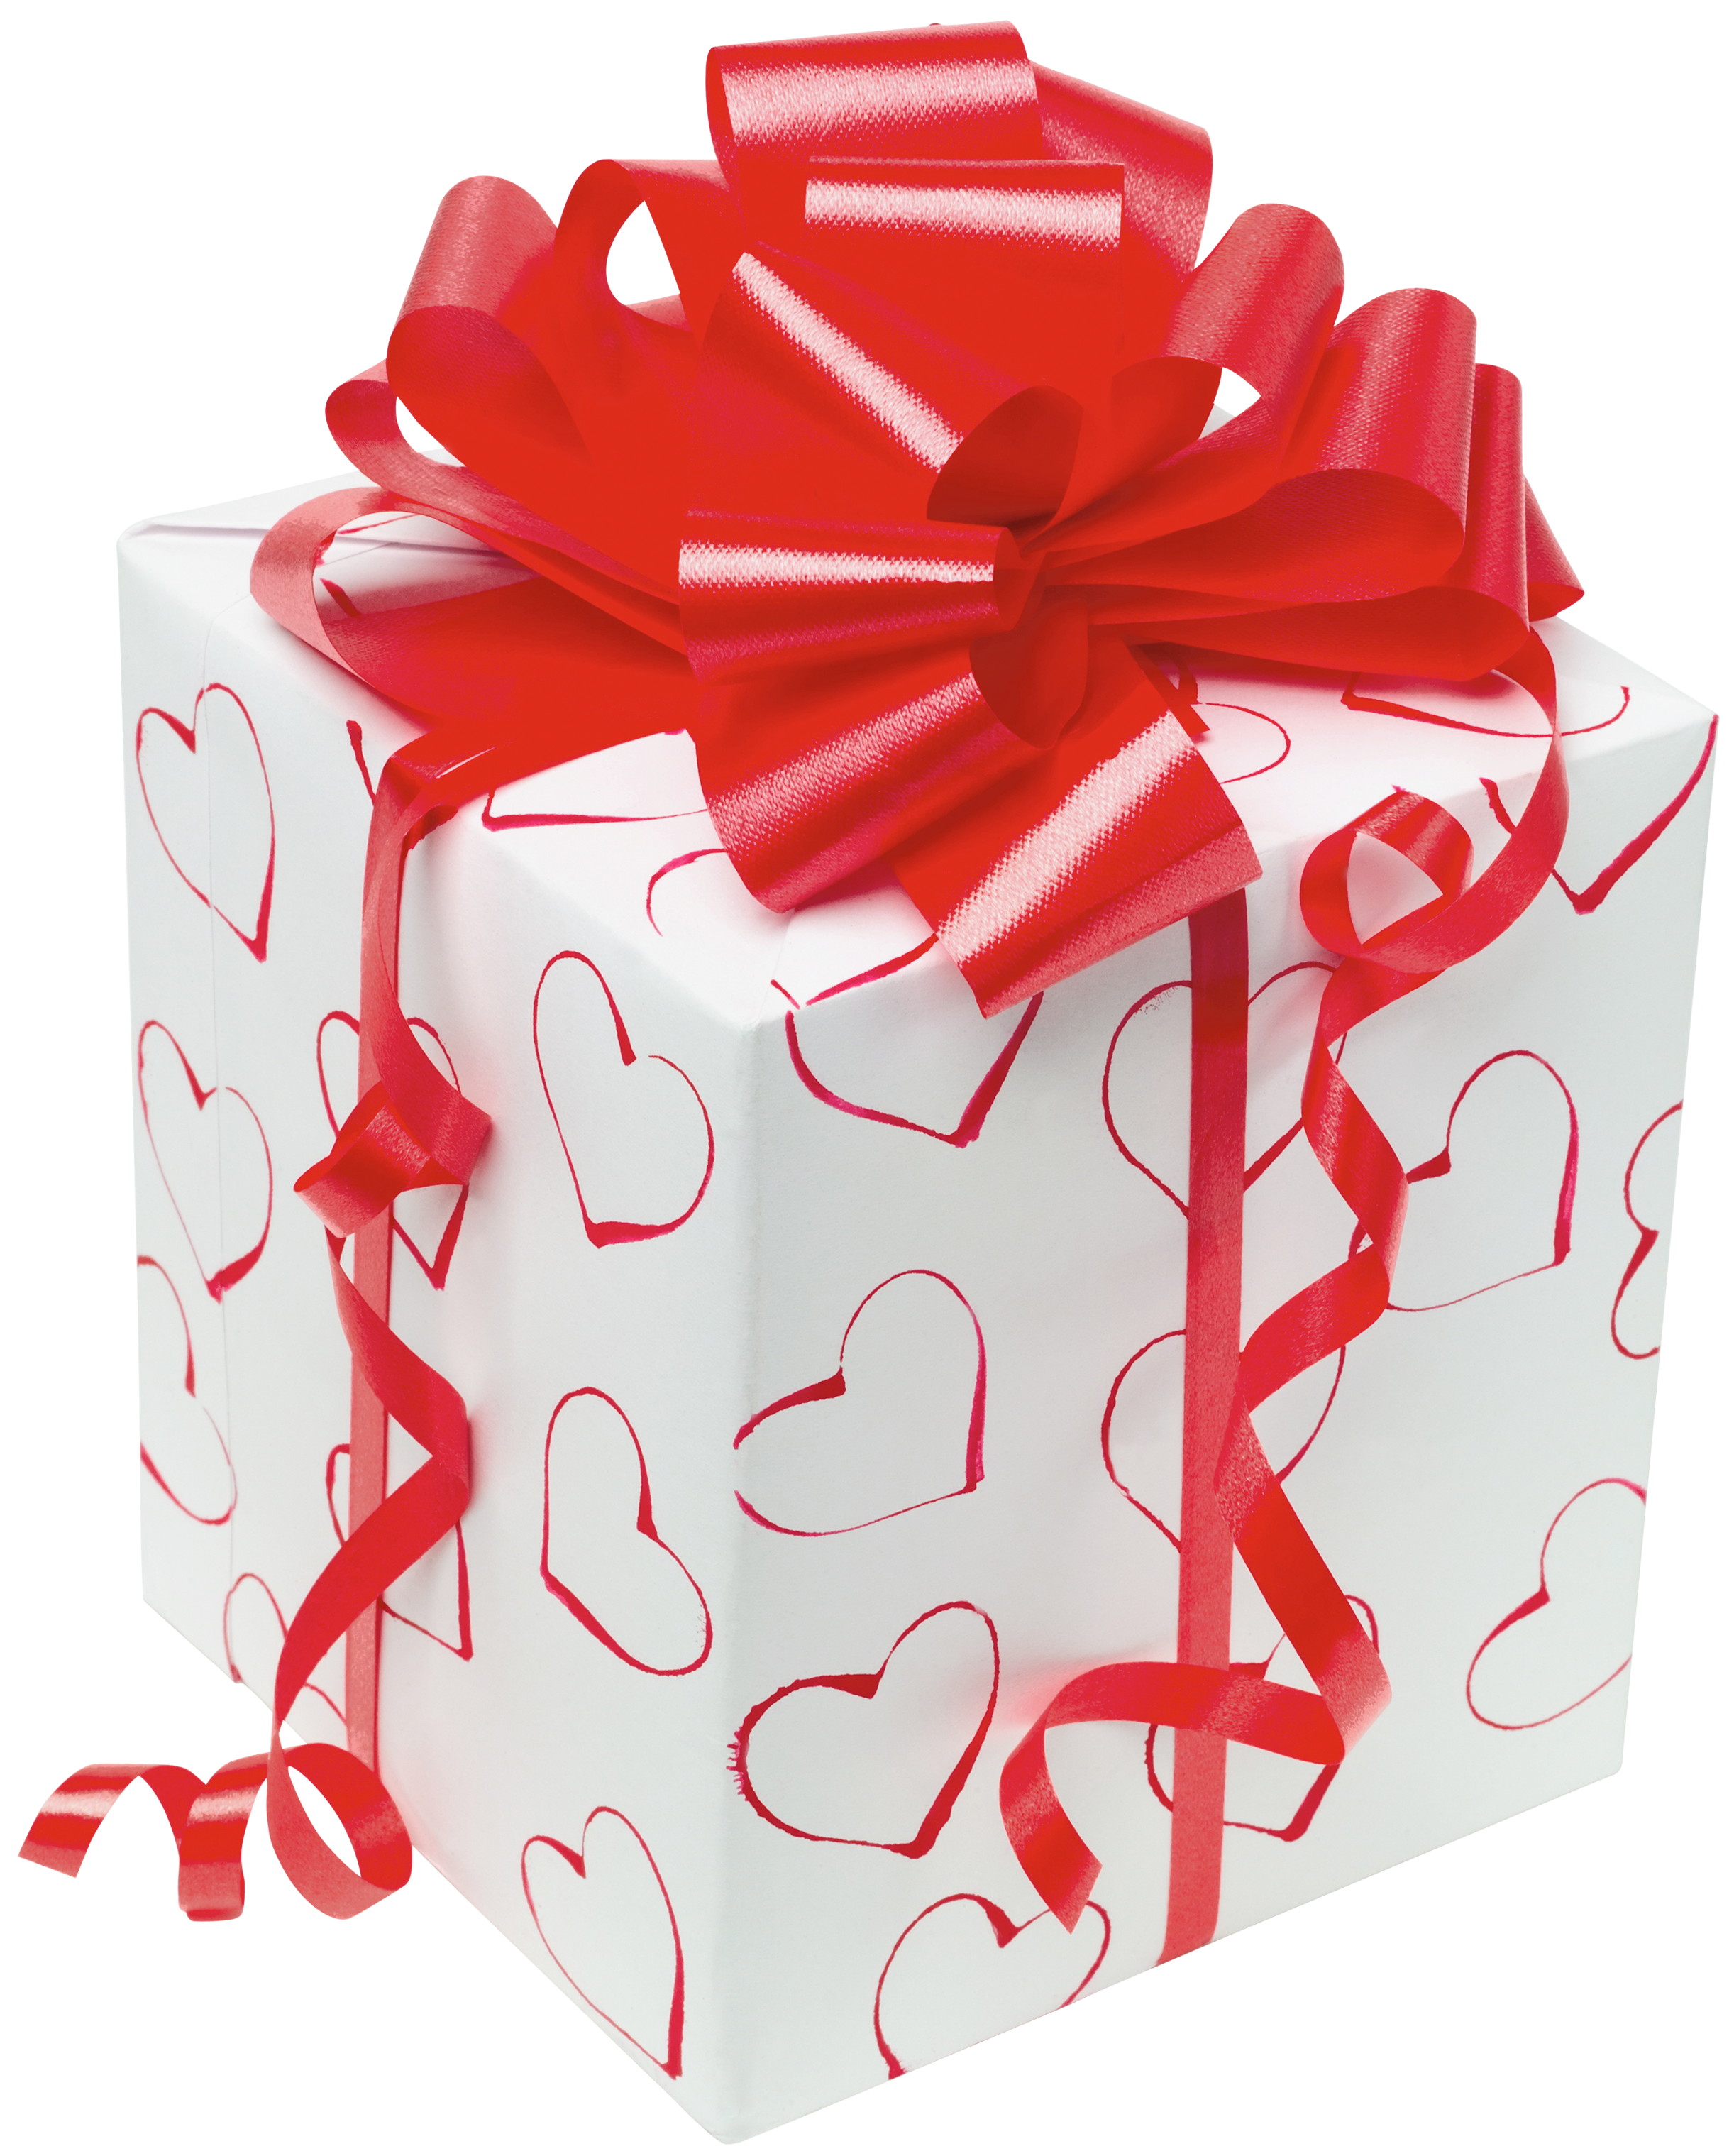 Free PNG Download: Birthday Gift Box Image